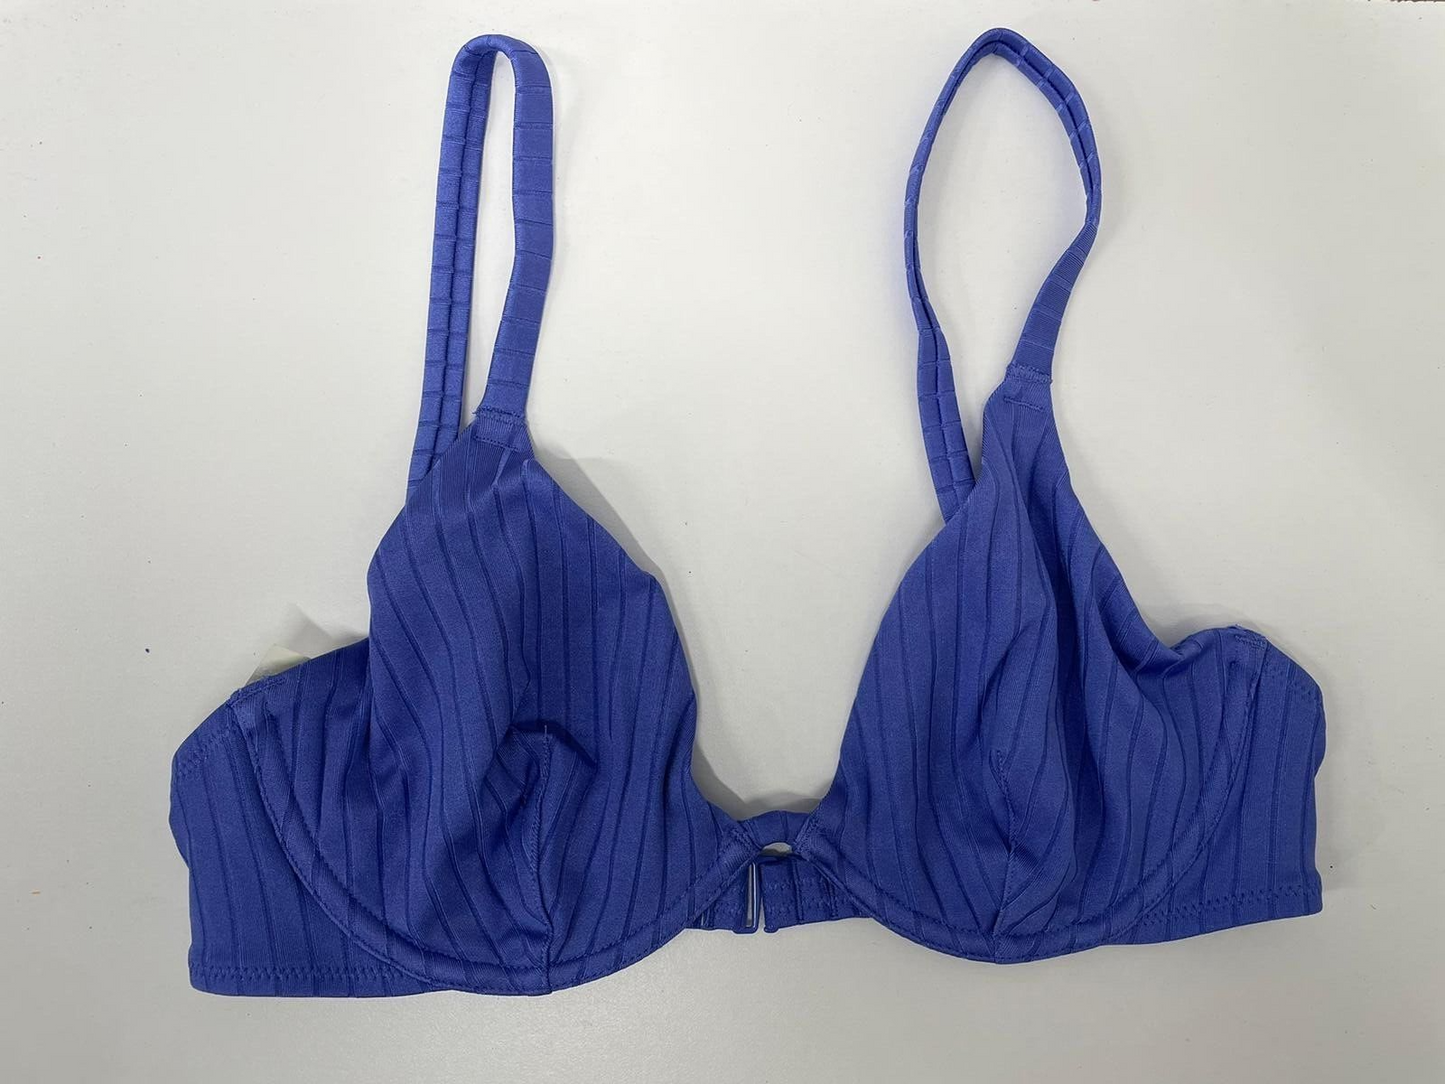 Aerie Women XL 34C High Cut Shine Ribbed Bikini Bottom Underwire Bikini Set Blue